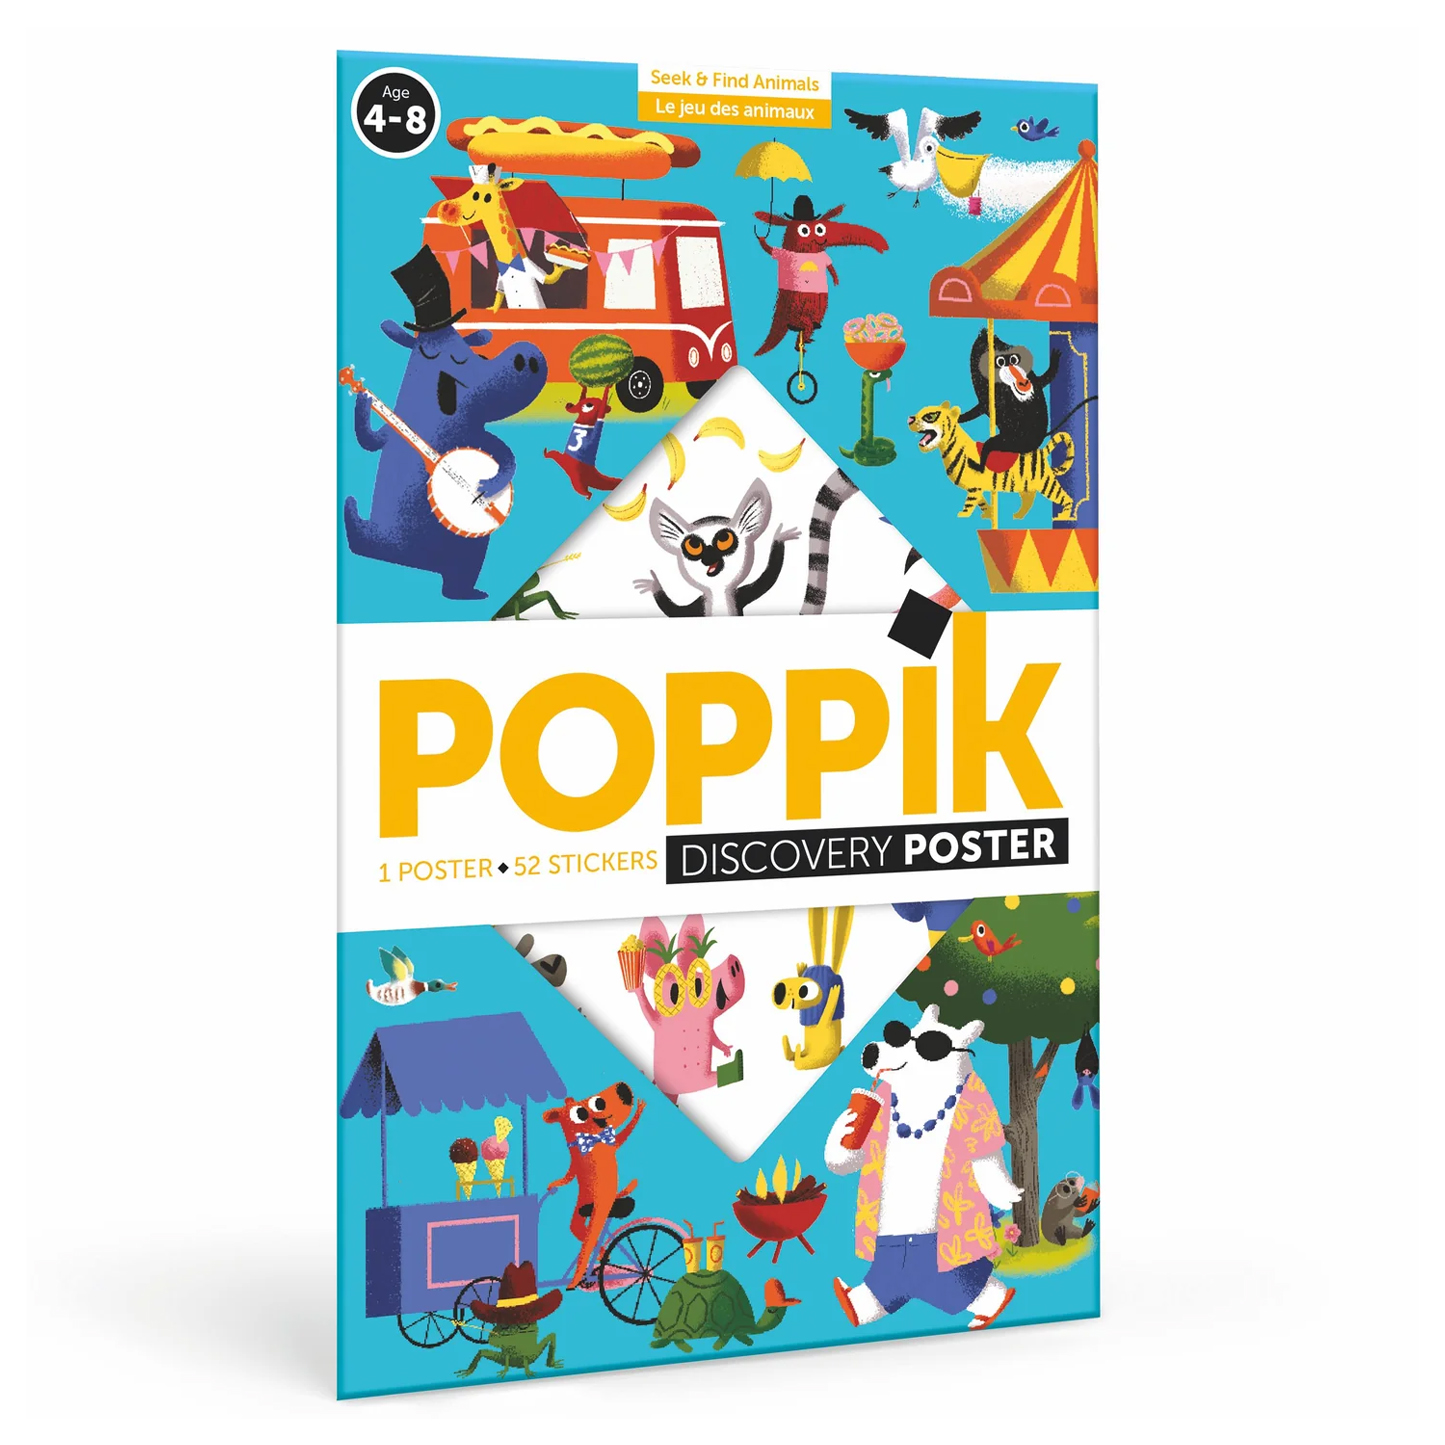 POPPIK Poppik Discovery Sticker Poster - Animals ( Seek & Find)